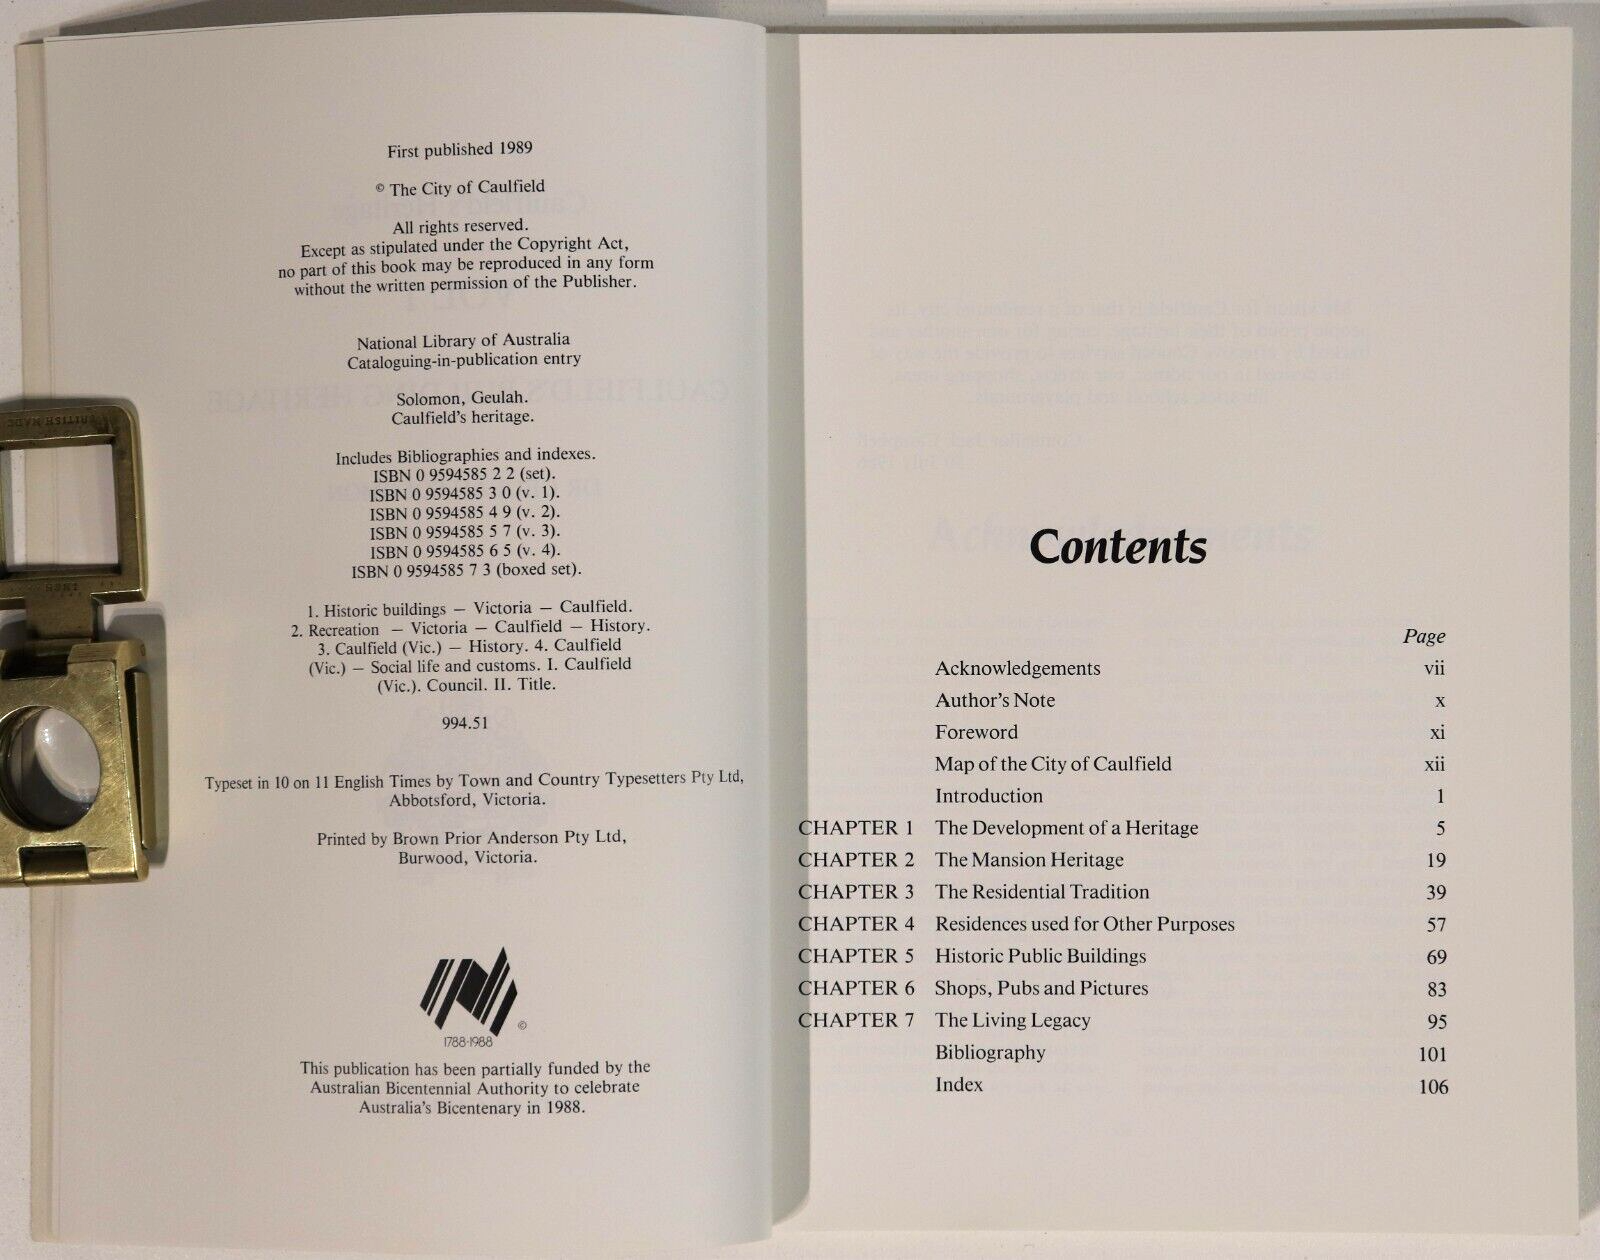 Caulfield's Heritage by Dr G Solomon - 1989 - 4 Vol. Australian History Book Set